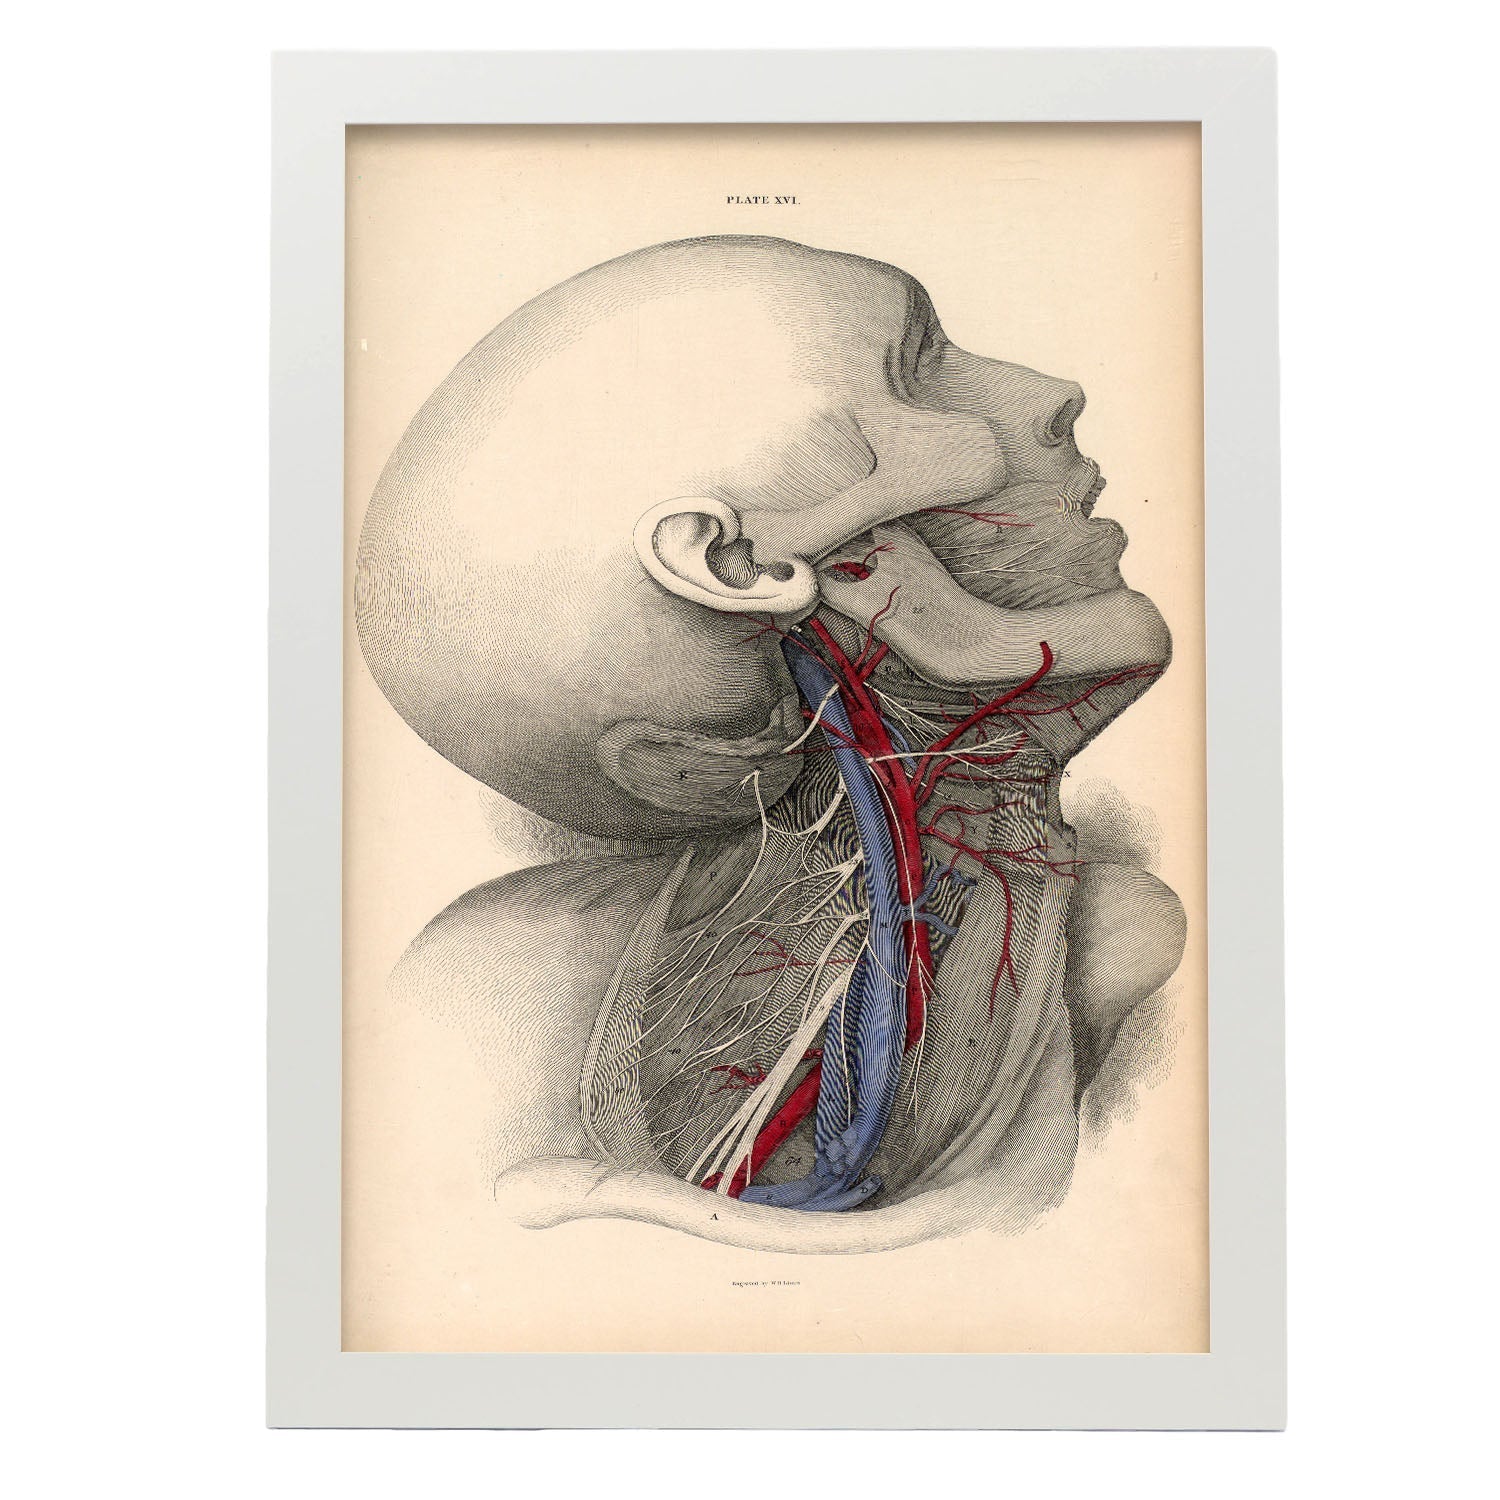 Dissection of the neck-Artwork-Nacnic-A3-Marco Blanco-Nacnic Estudio SL